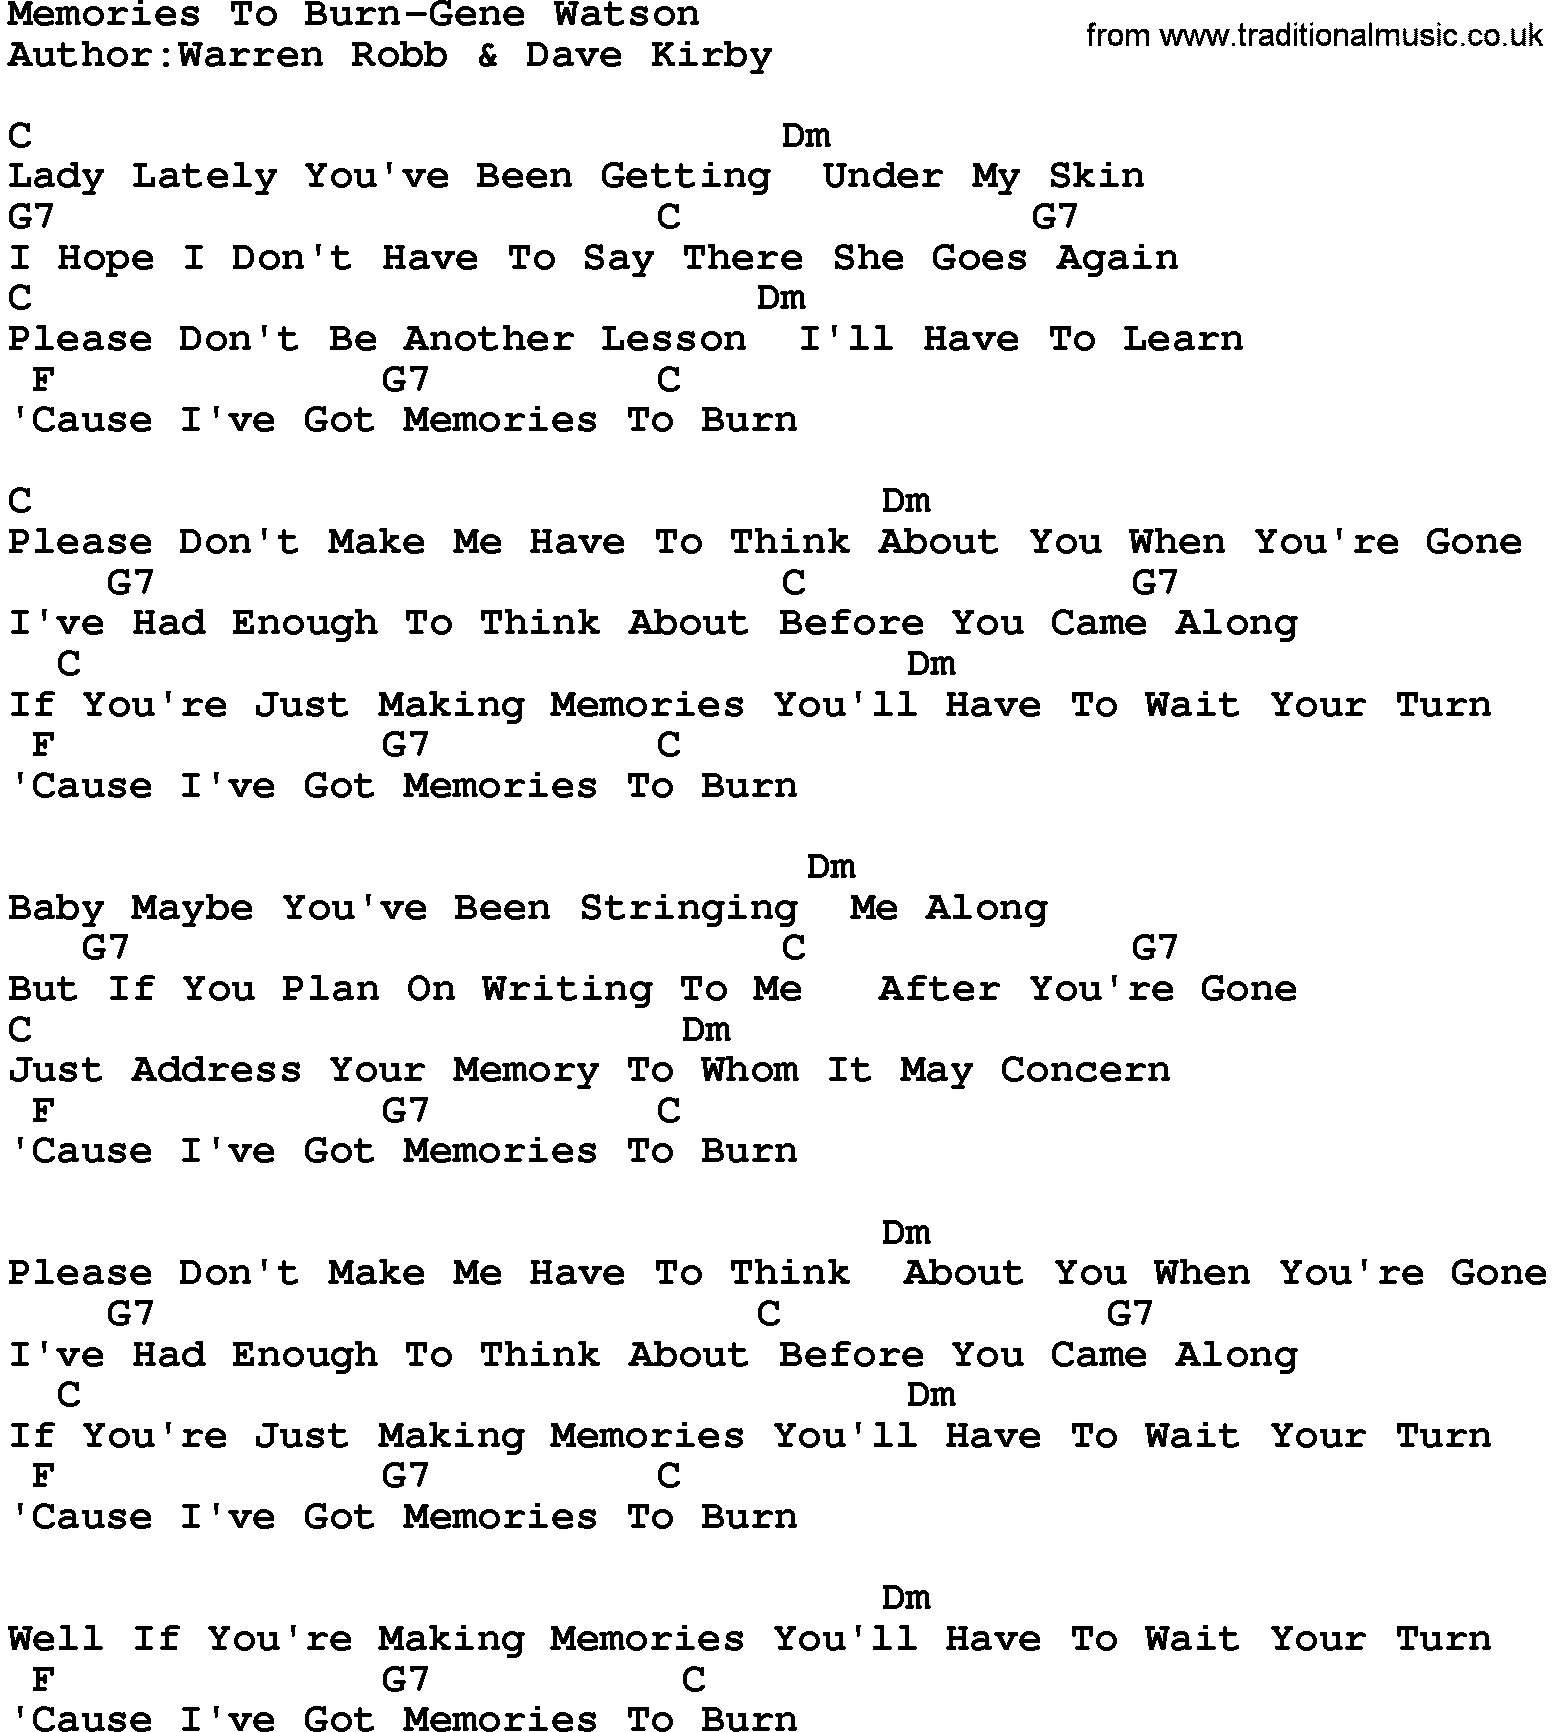 Country music song: Memories To Burn-Gene Watson lyrics and chords